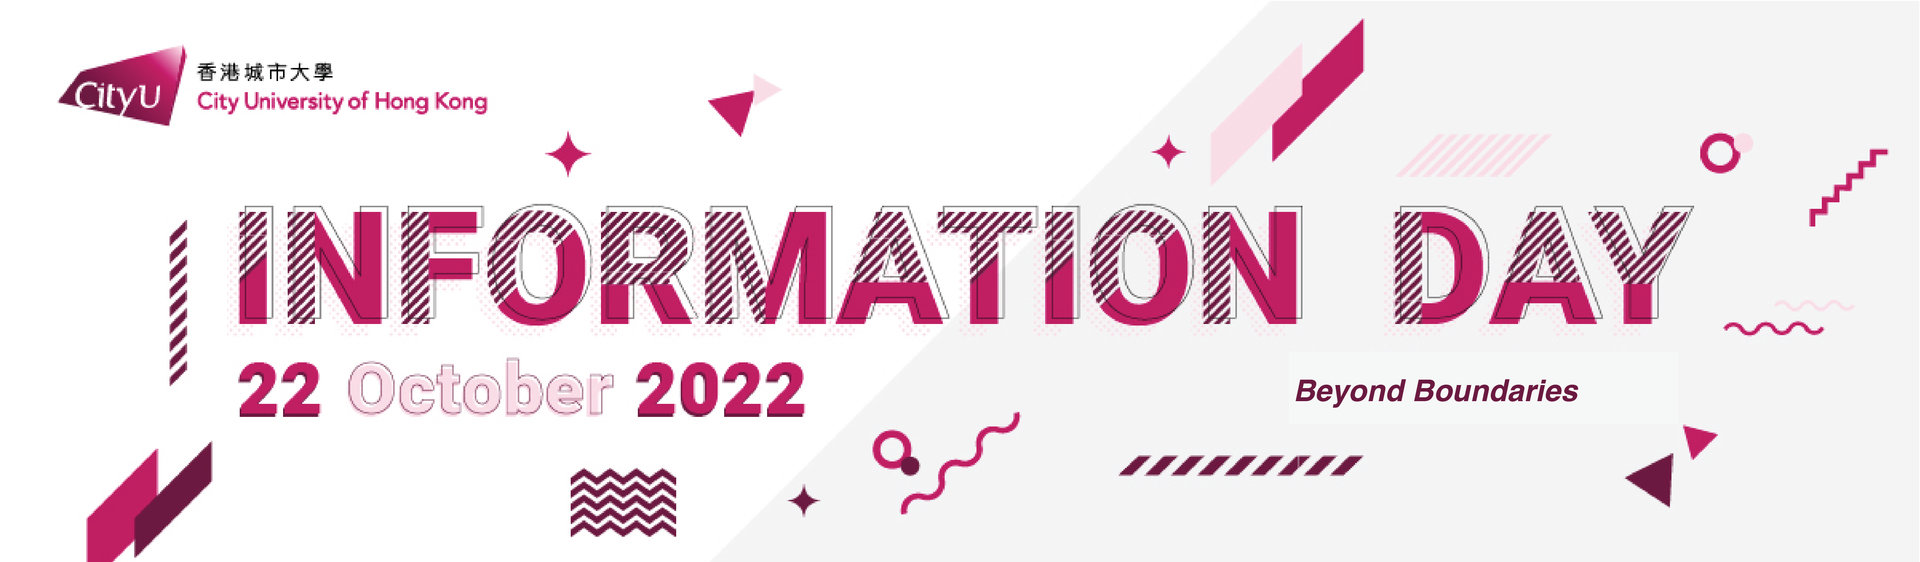 Virtual CityU Information Day 2022